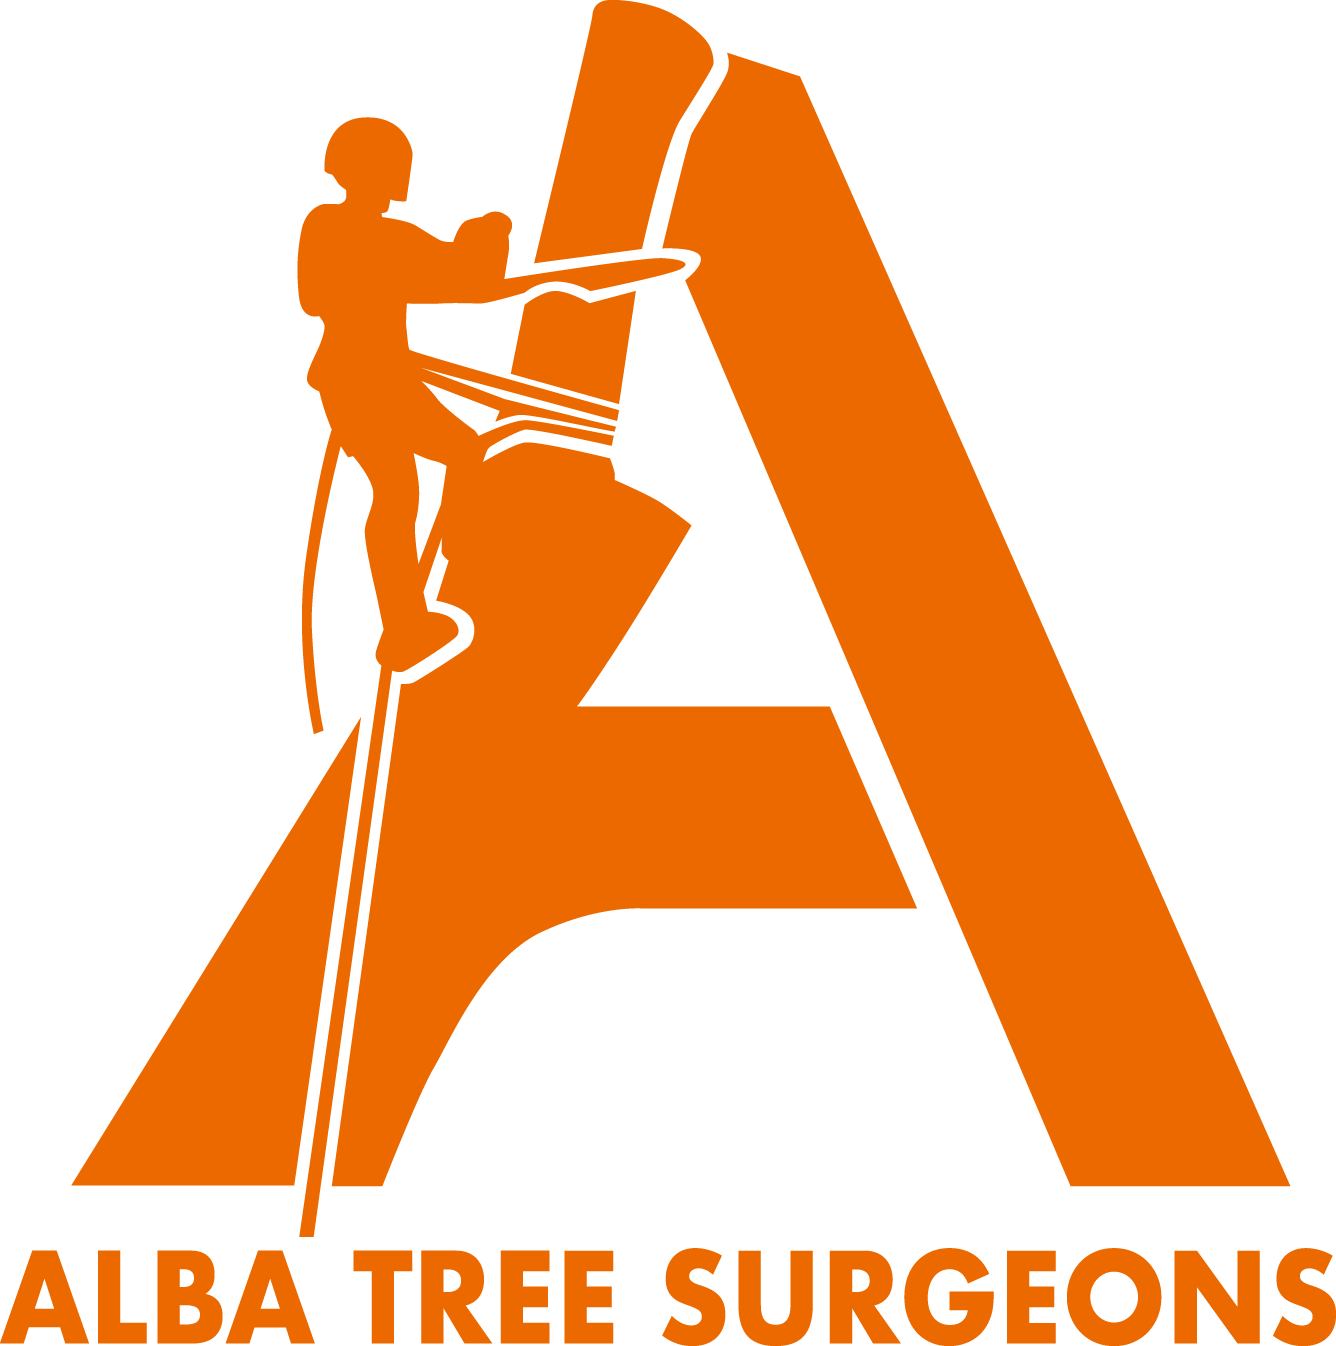 Alba Tree Surgeons: Your Local Edinburgh Tree Surgeon